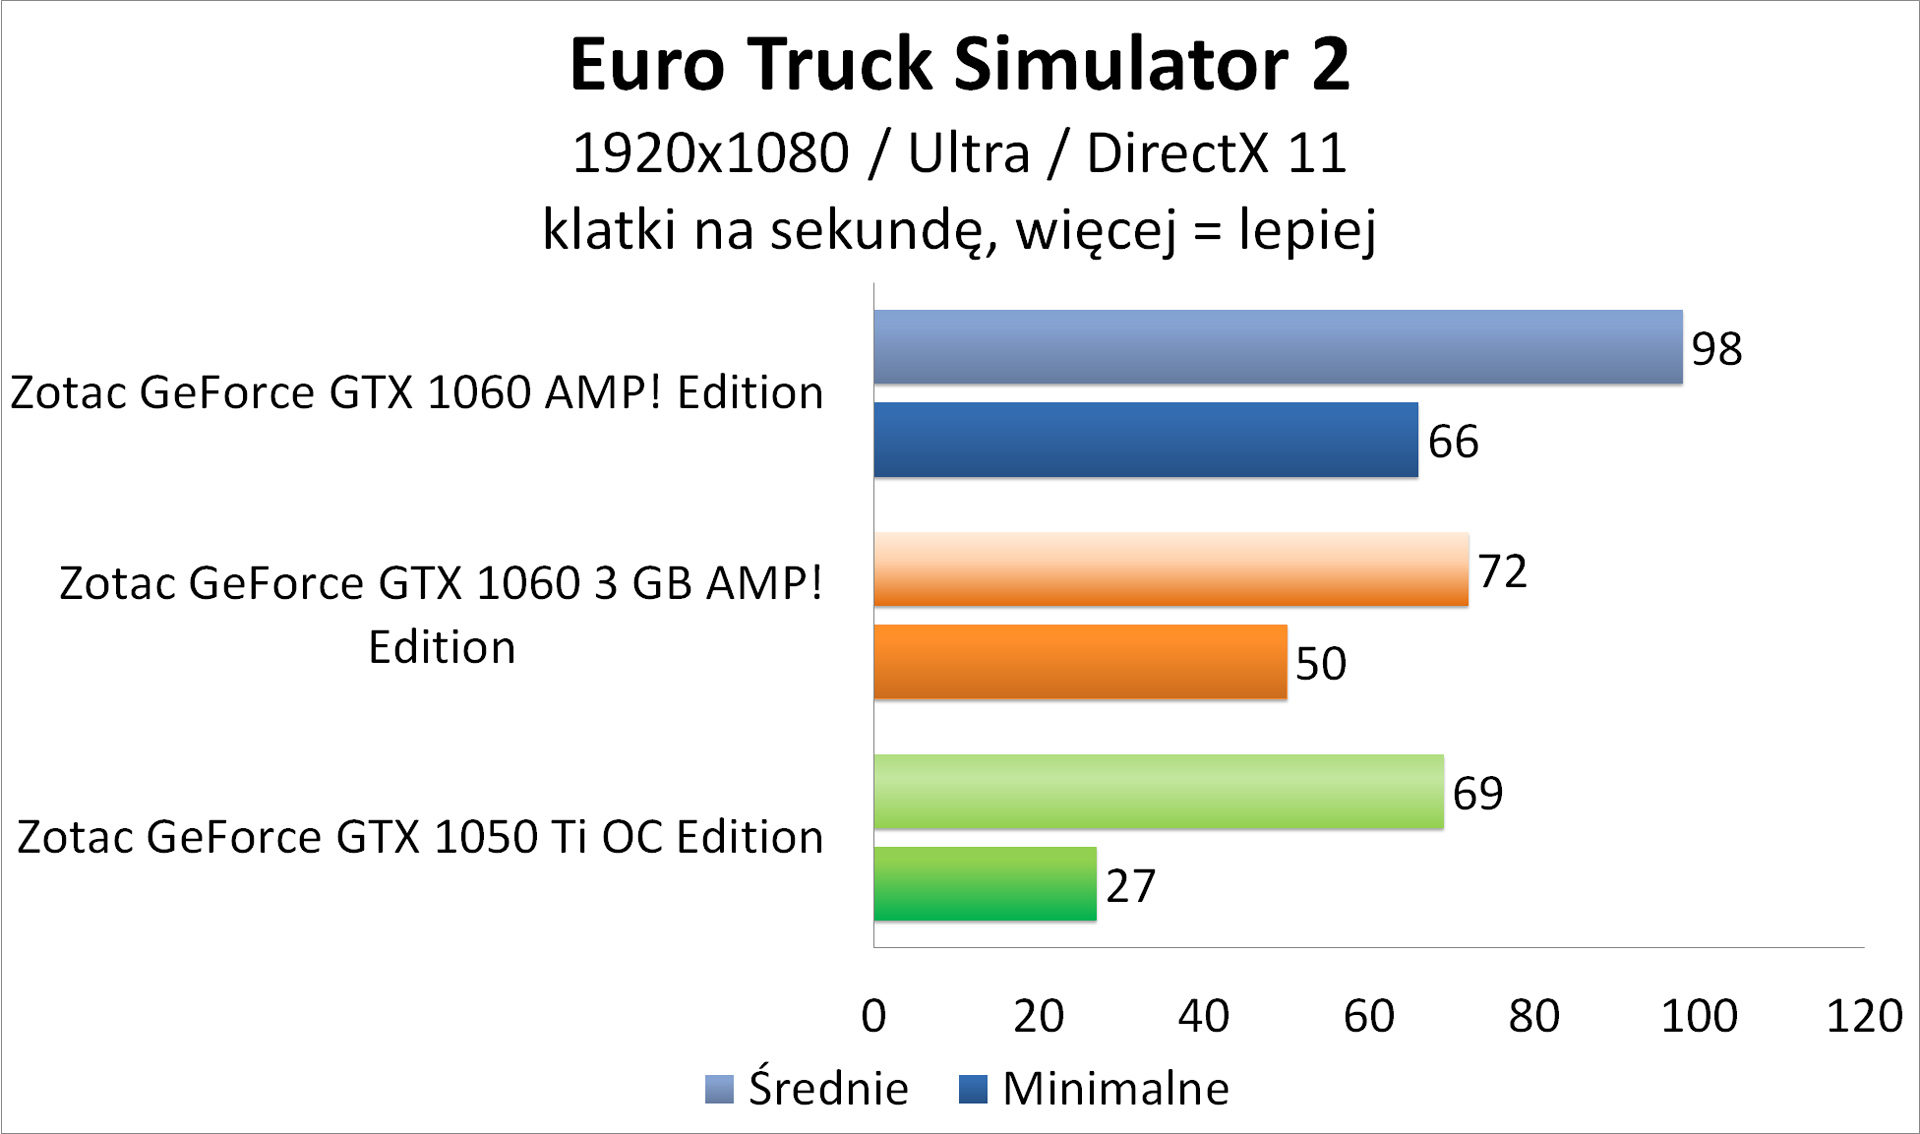 Zotac GeForce GTX 1050 Ti OC Edition - Euro Truck Simulator 2